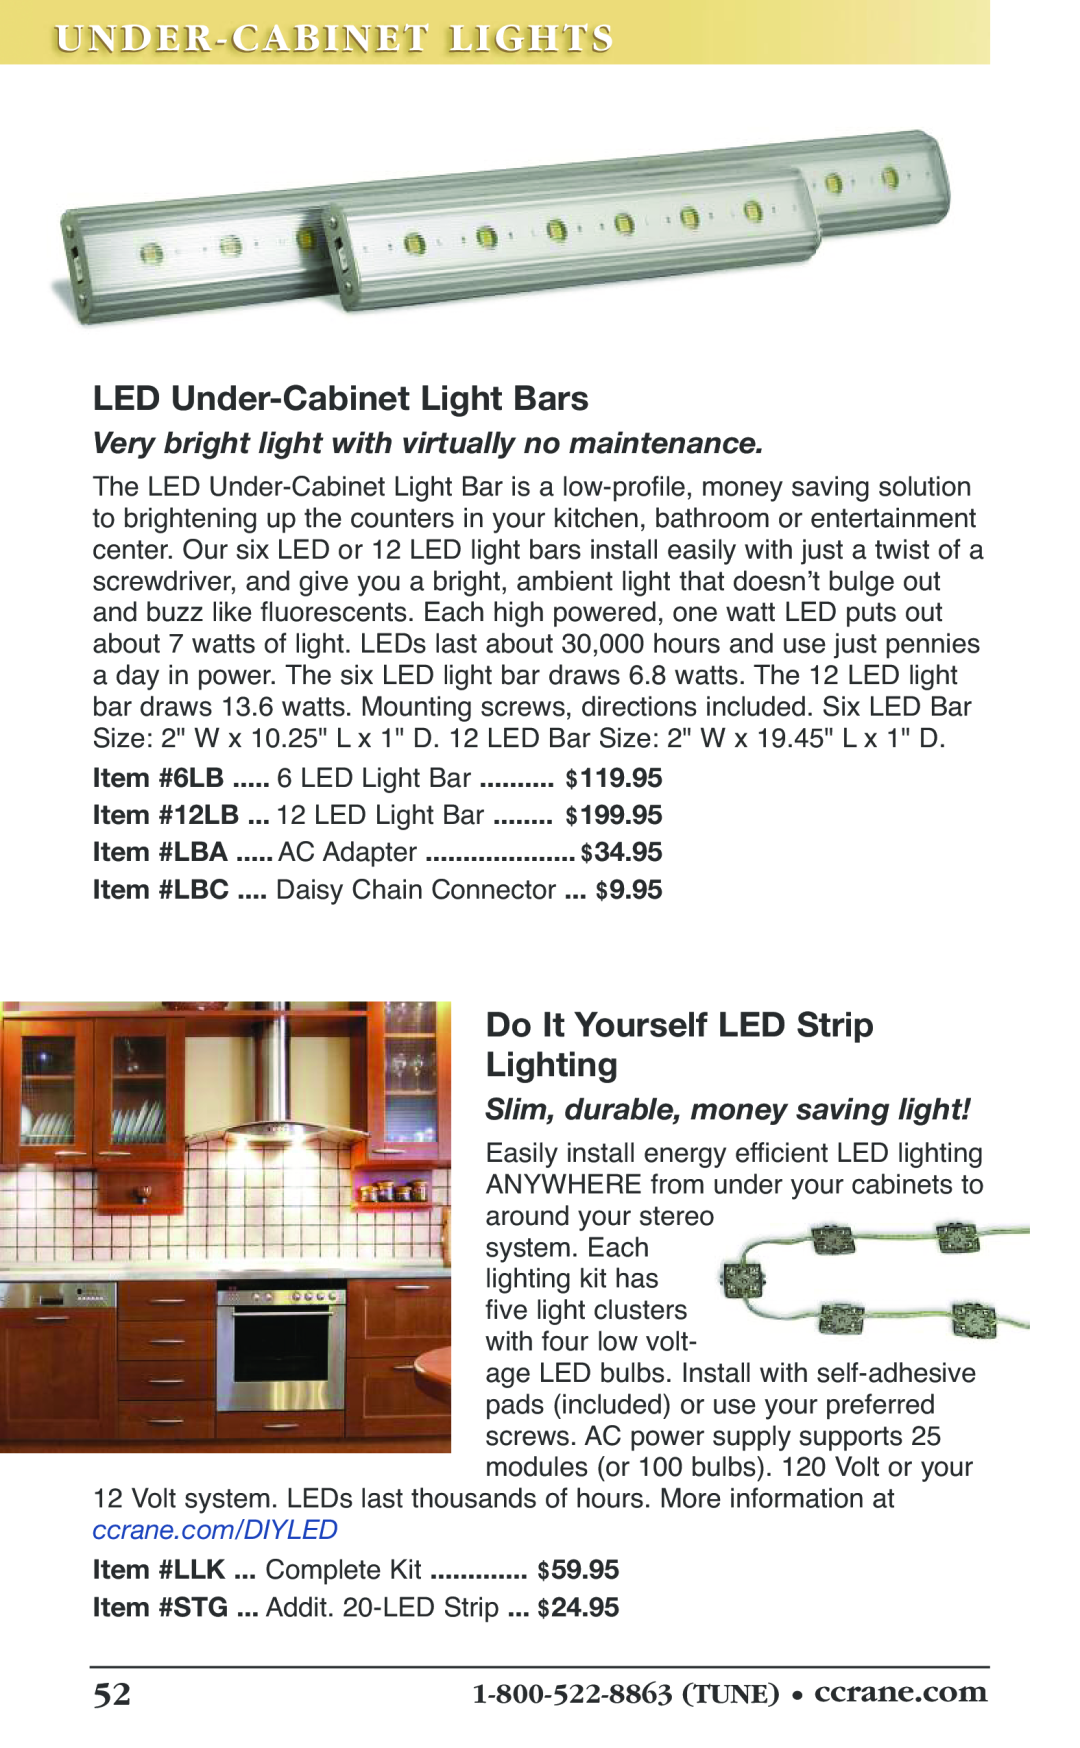 C. Crane 19f manual Undeerr--Cabinetnet Ligghts, LED Under-CabinetLight Bars, Do It Yourself LED Strip Lighting, Item #12LB 